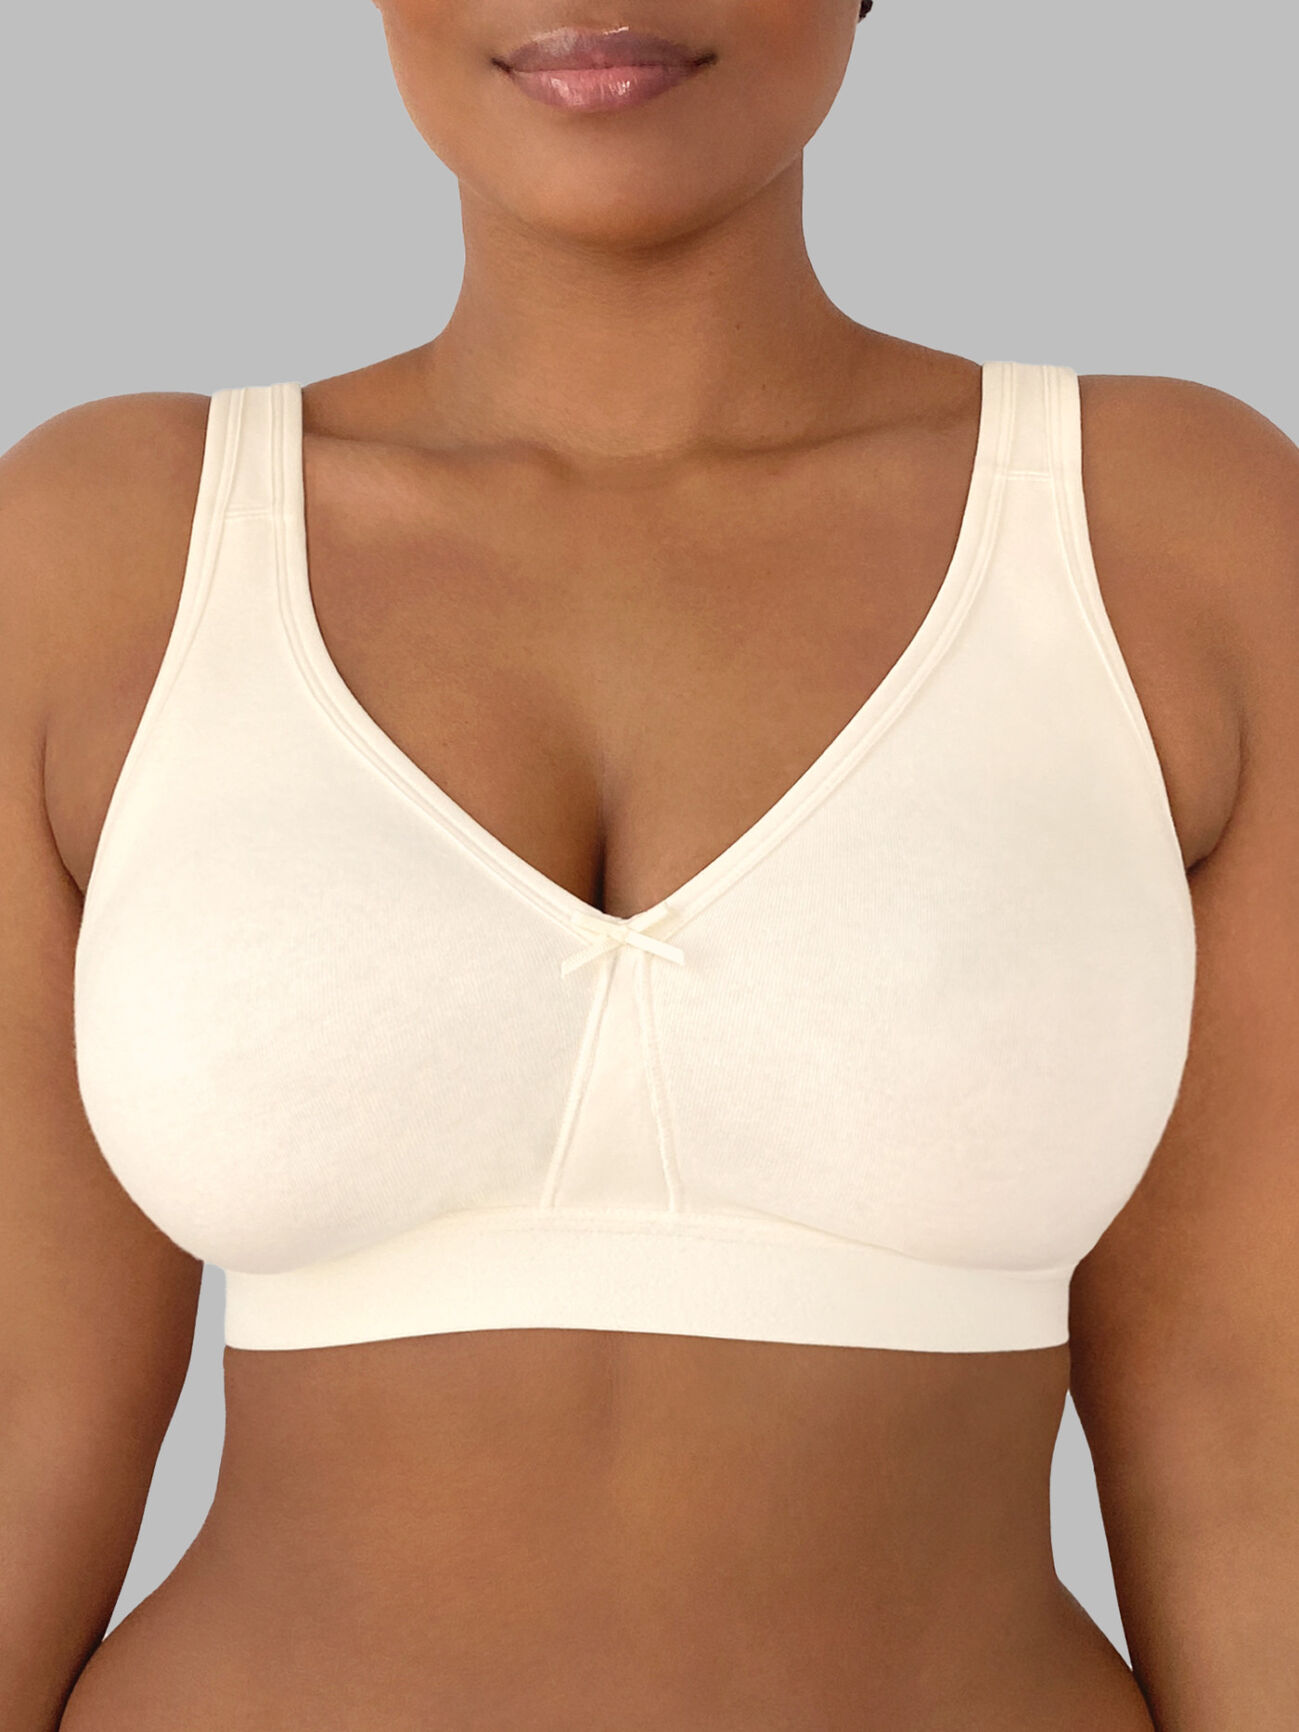 Cotton Comfort Wireless Bra  Wireless bra, Plus size women